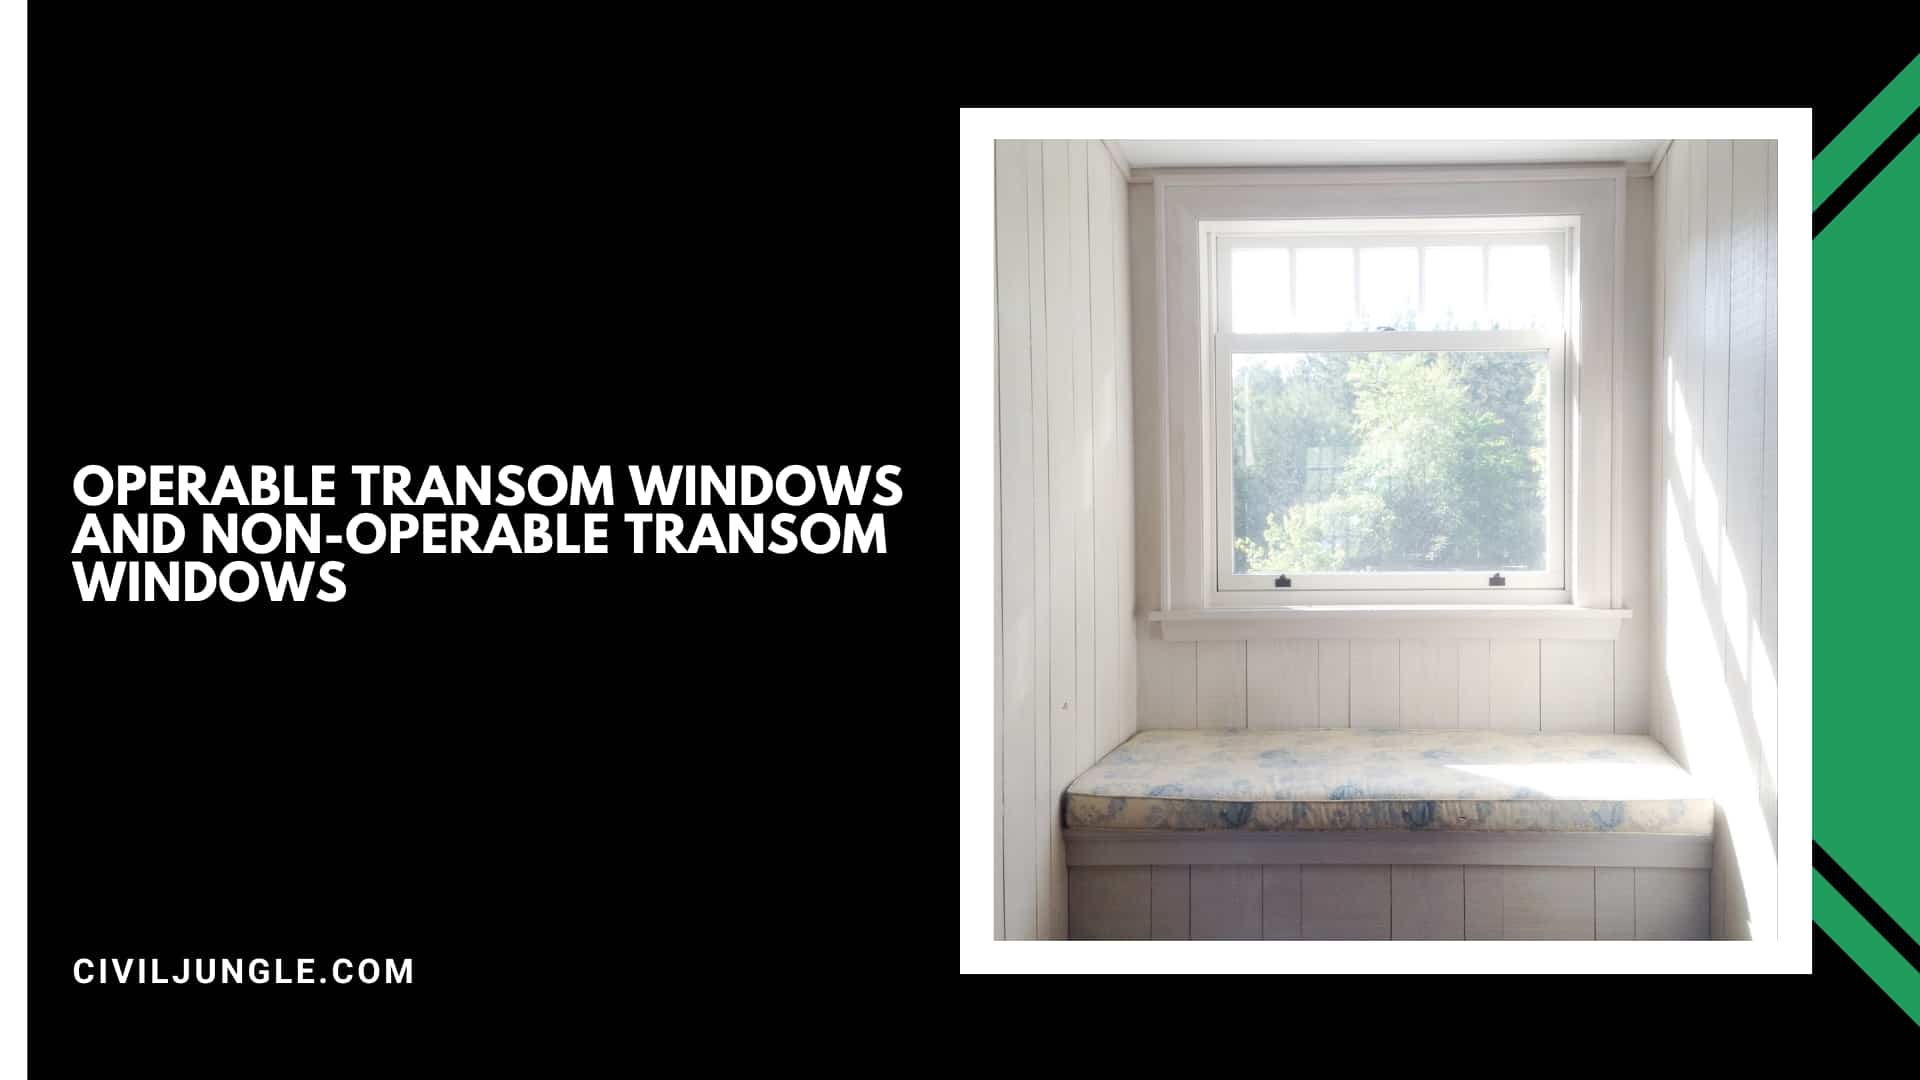 Operable Transom Windows and Non-Operable Transom Windows